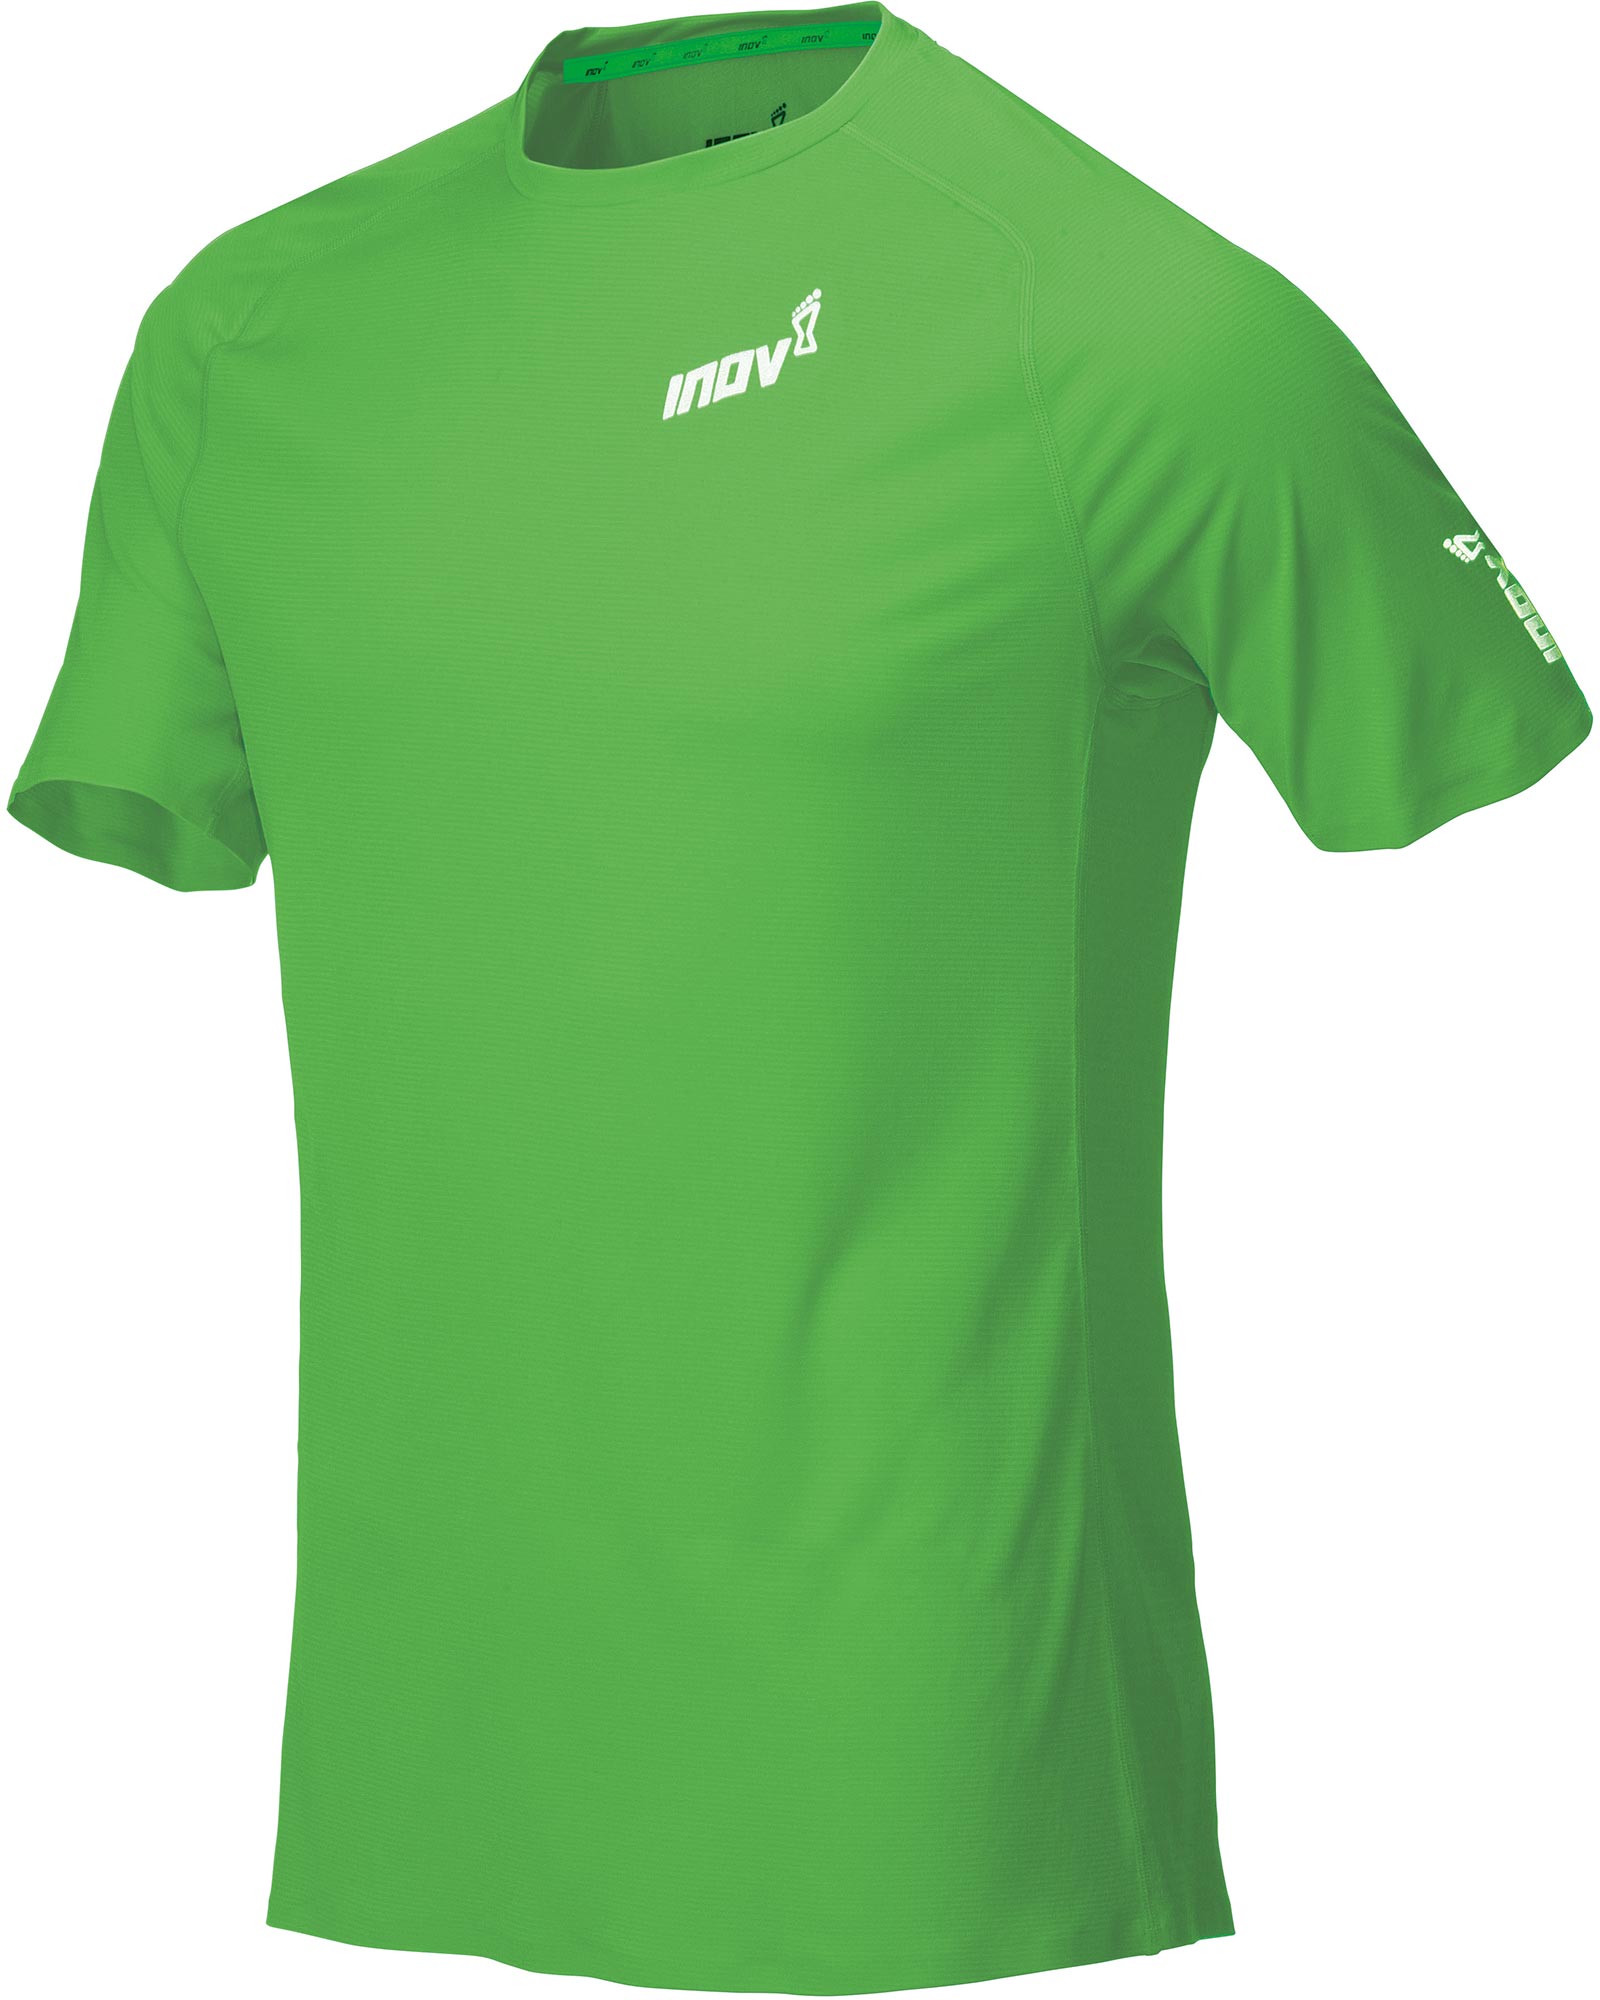 Inov 8 Base Elite Men’s T Shirt - Green XL